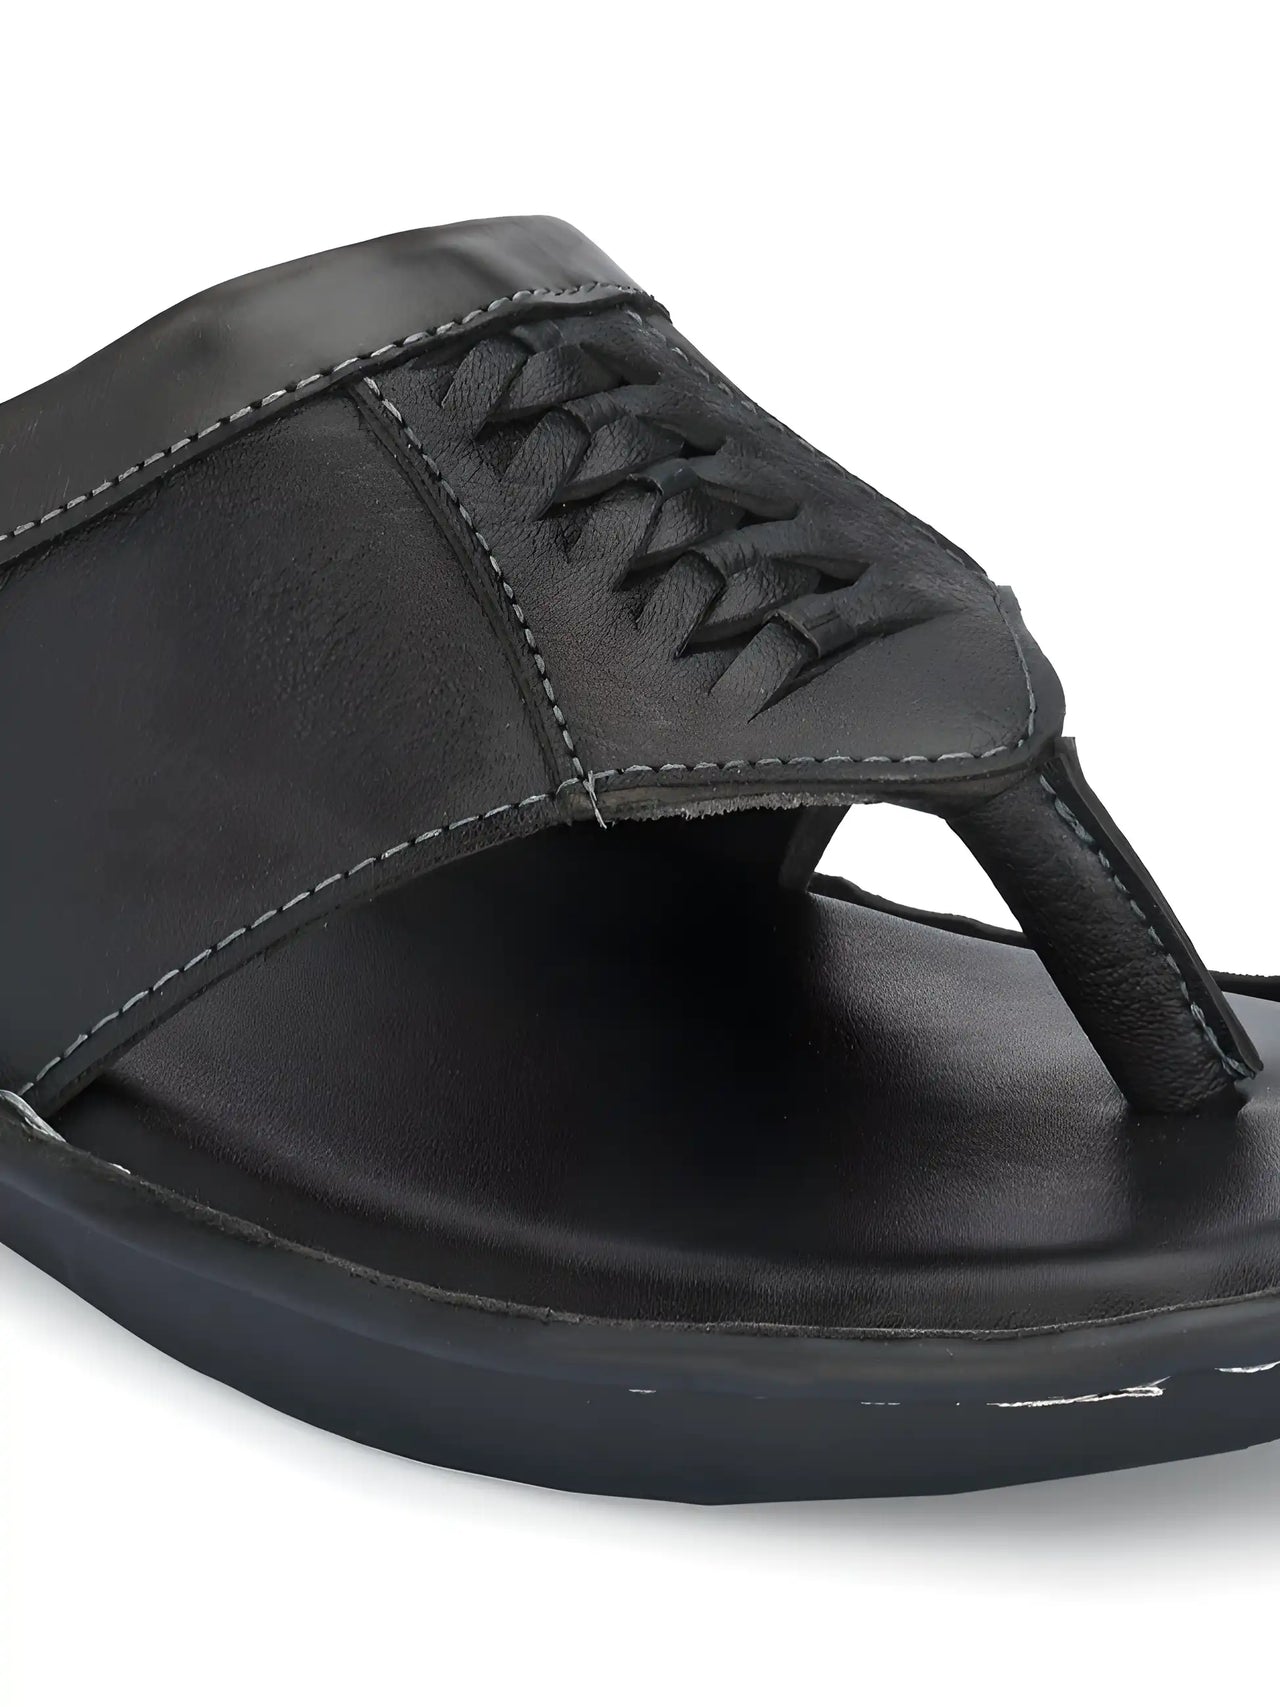 Bucik Men's Black Synthetic Leather Slip-On Casual Slipper